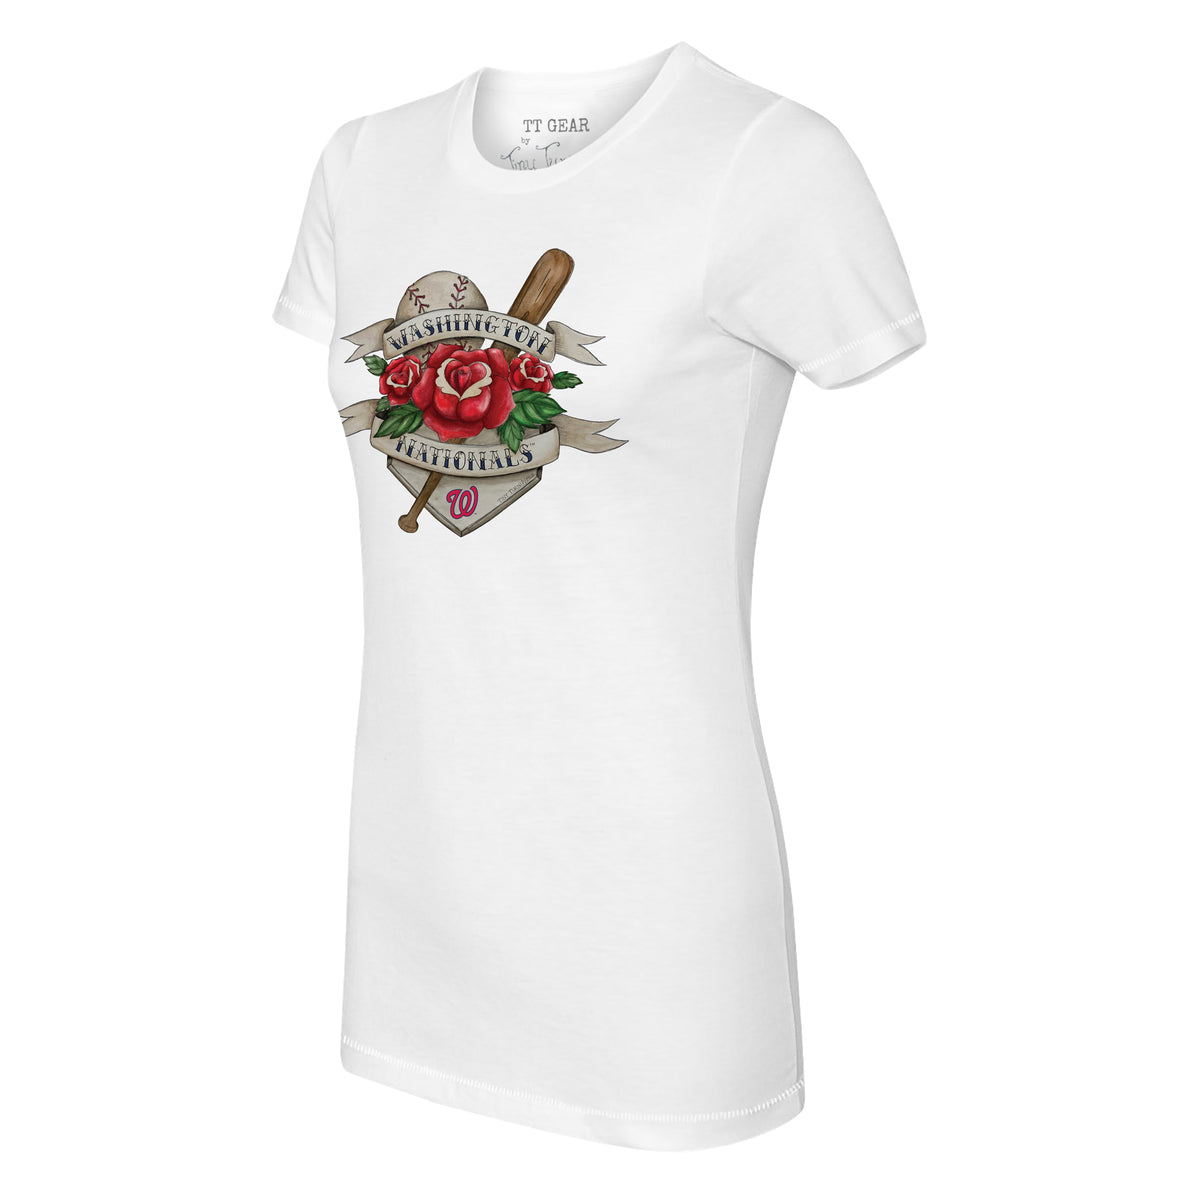 Washington Nationals Tattoo Rose Tee Shirt